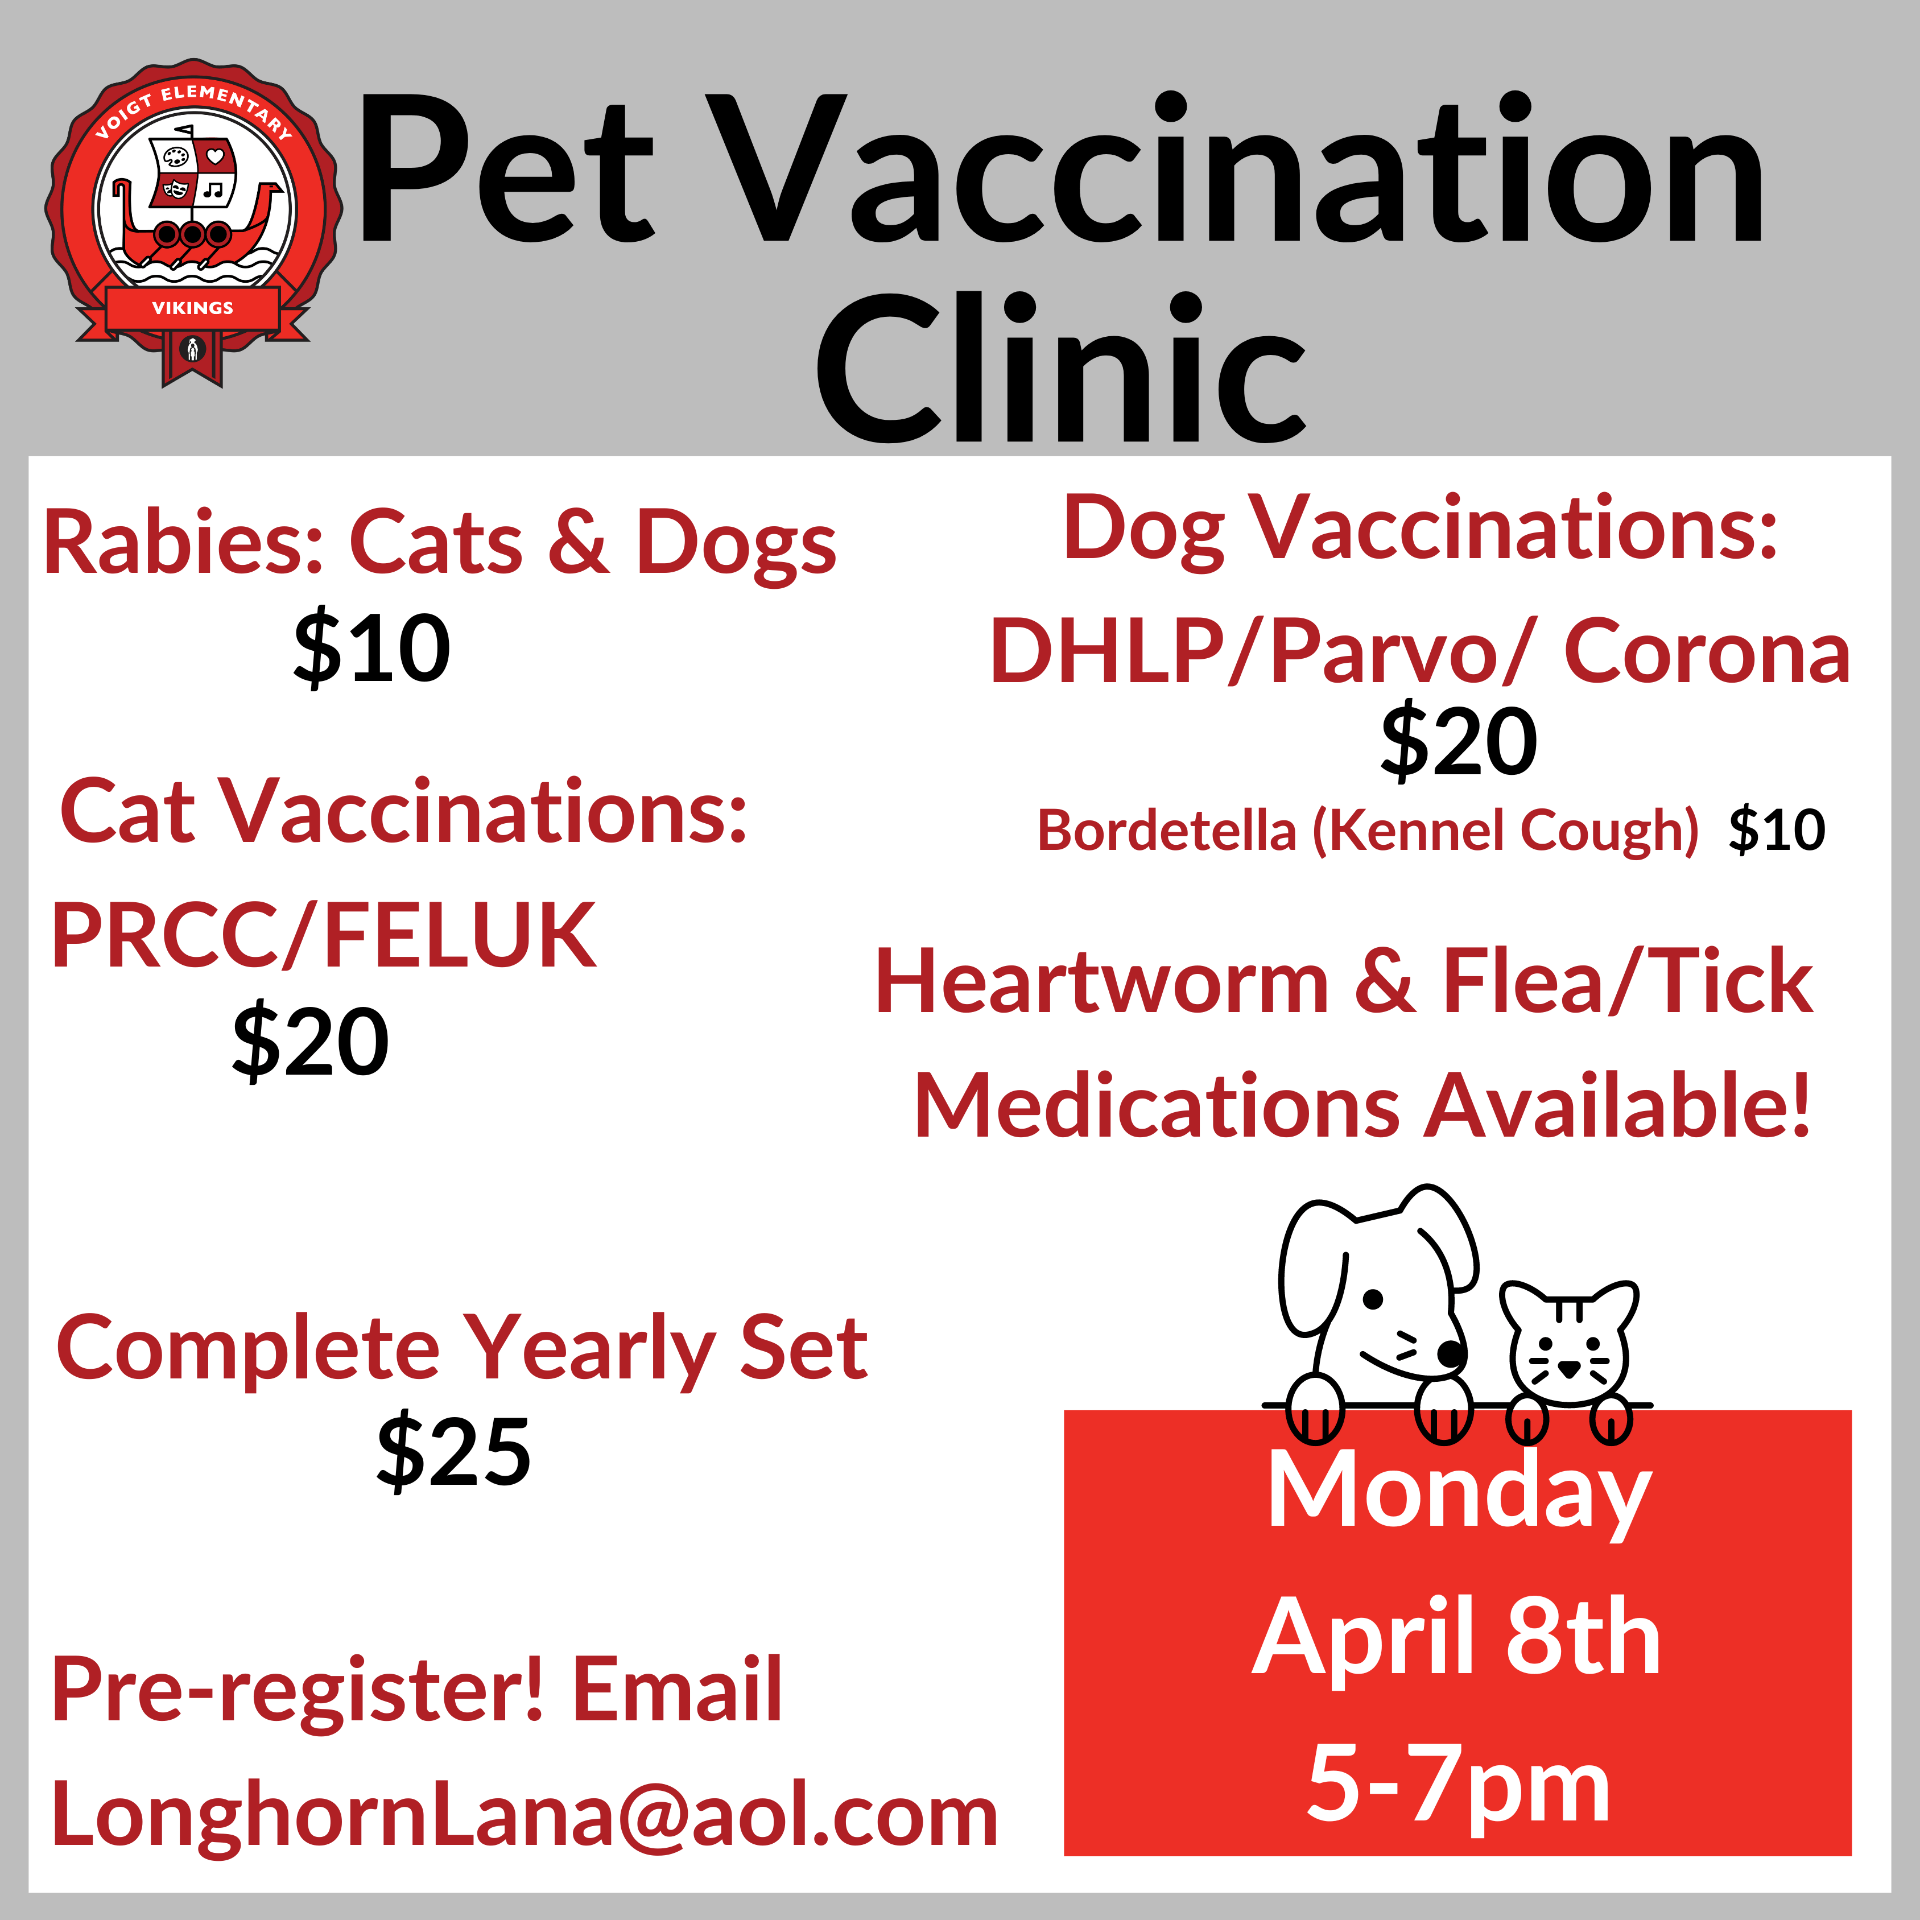 Pet Vaccination Clinic<br />
Monday, April 8th 5-7pm<br />
email Longhorn_lana@aol.com